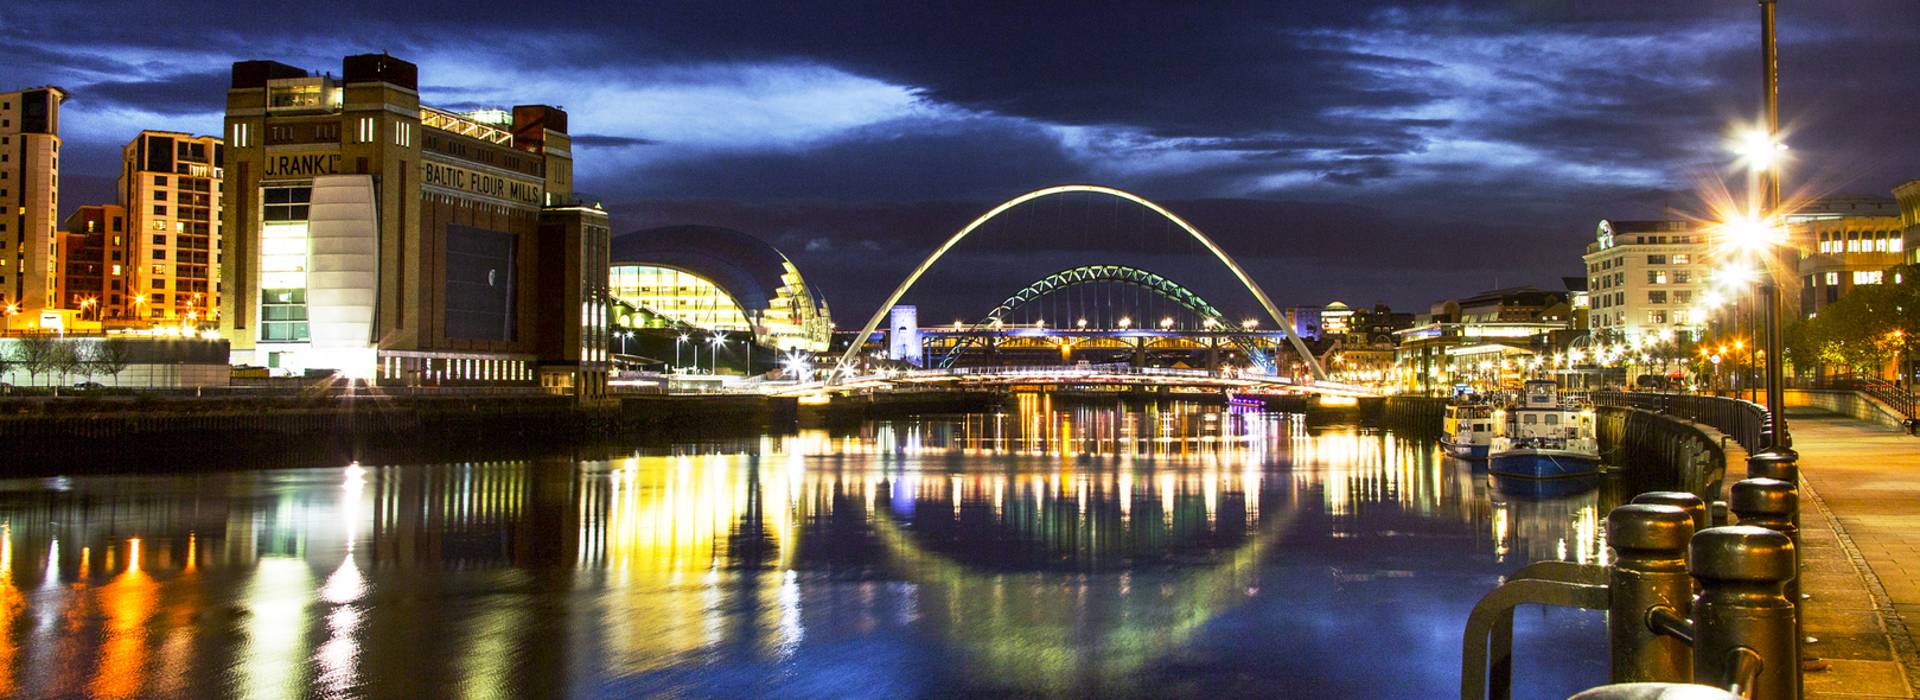 Bridges in Newcastle upon Tyne